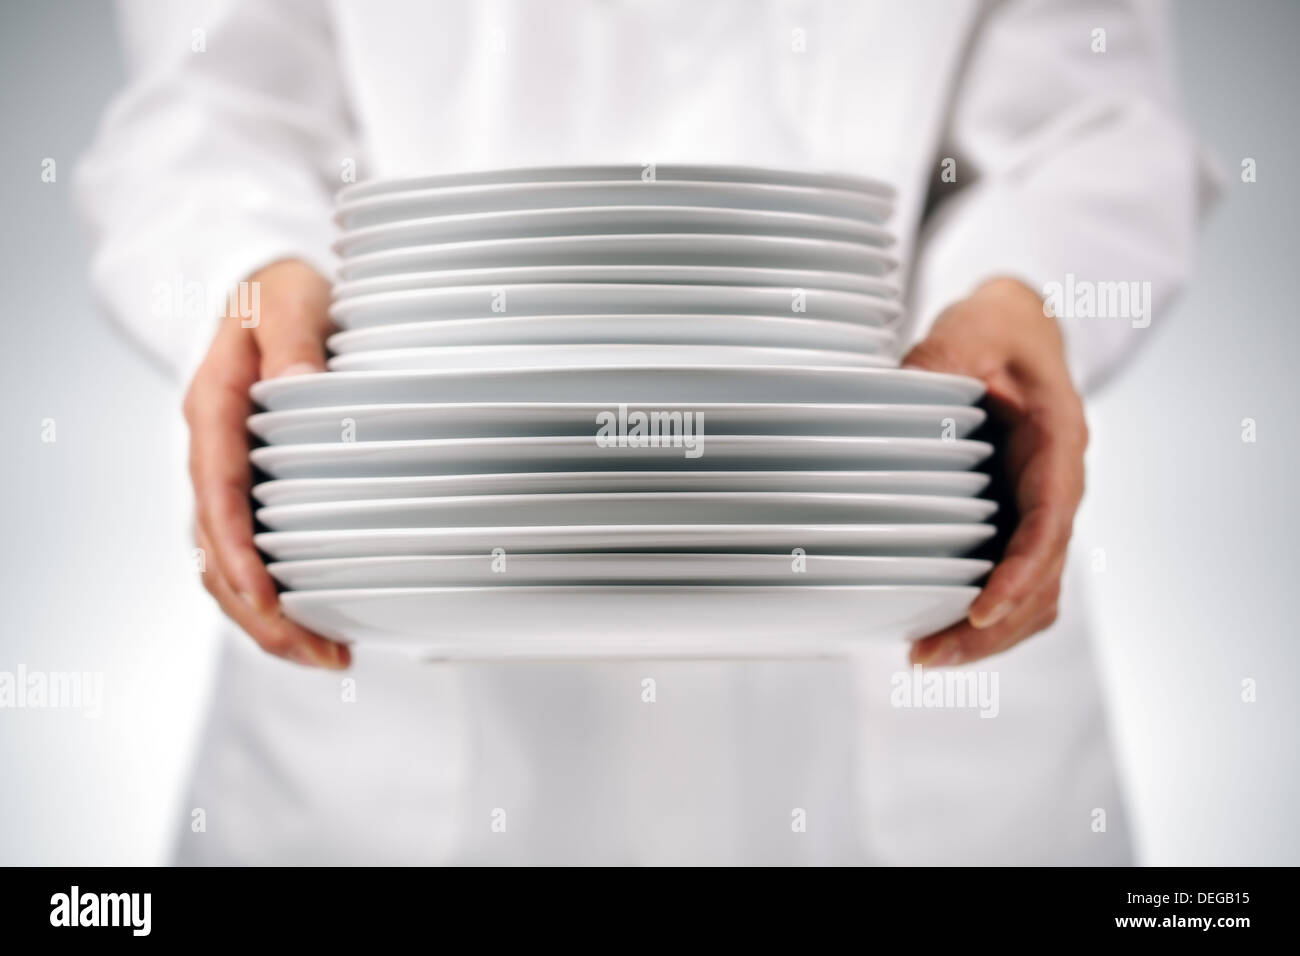 Holding plates Stock Photo